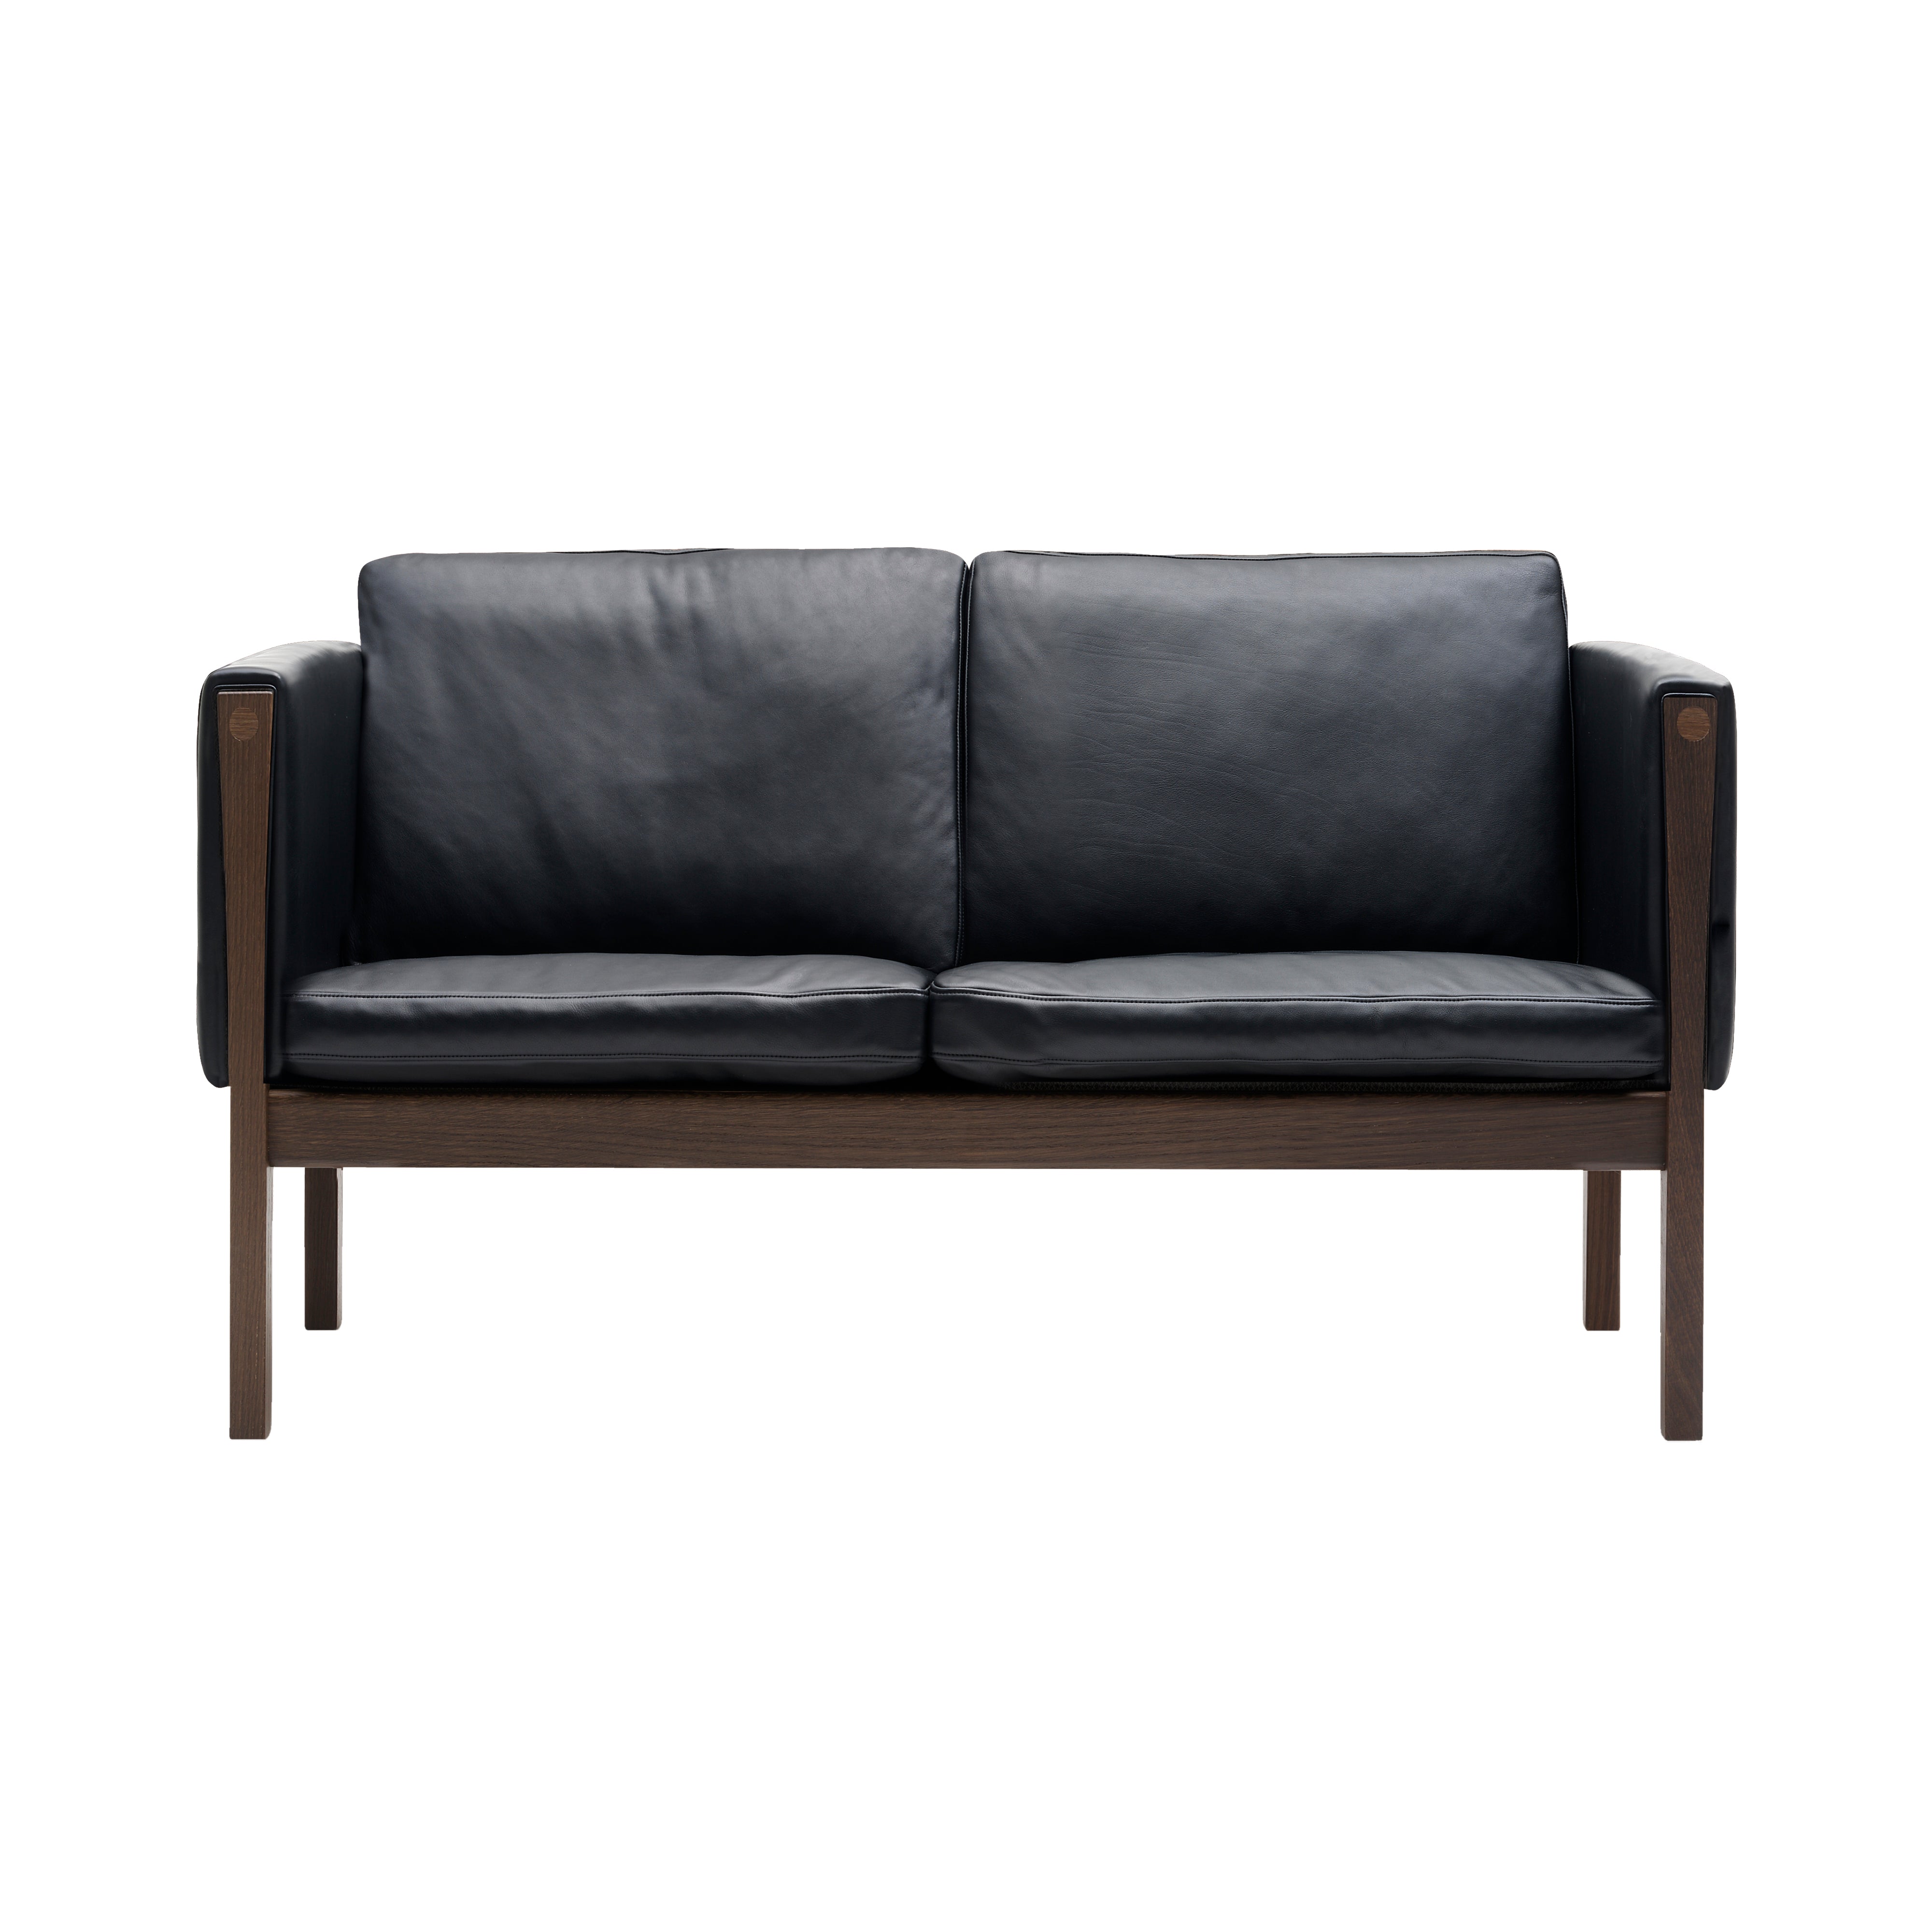 CH162 2 Seater Sofa: Oiled Walnut